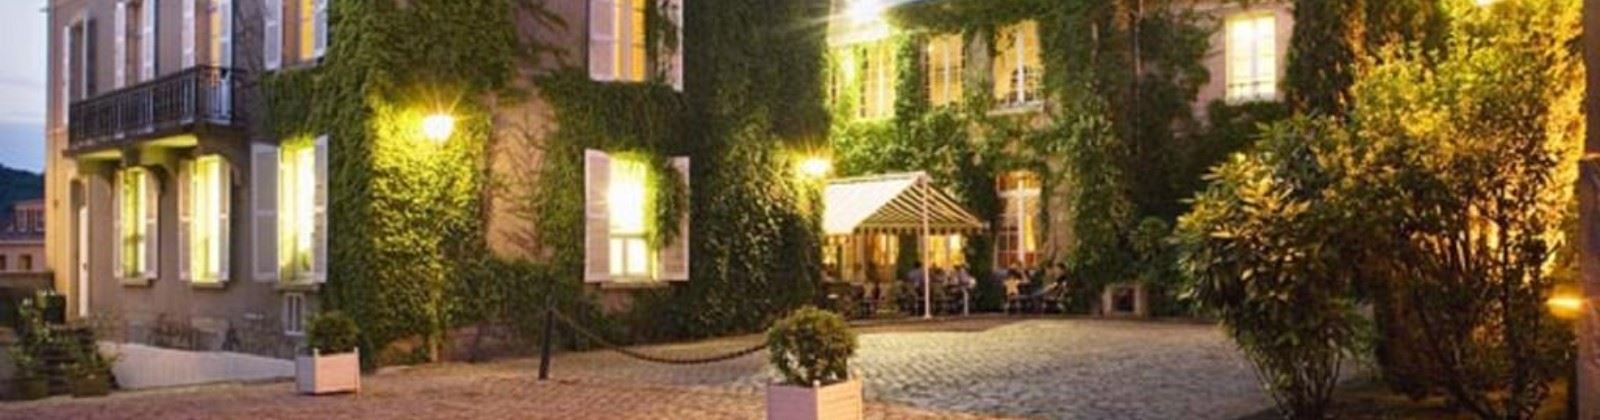 OLEVENE image - hotel-de-la-petite-verrerie-olevene-restaurant-seminaire-conference-